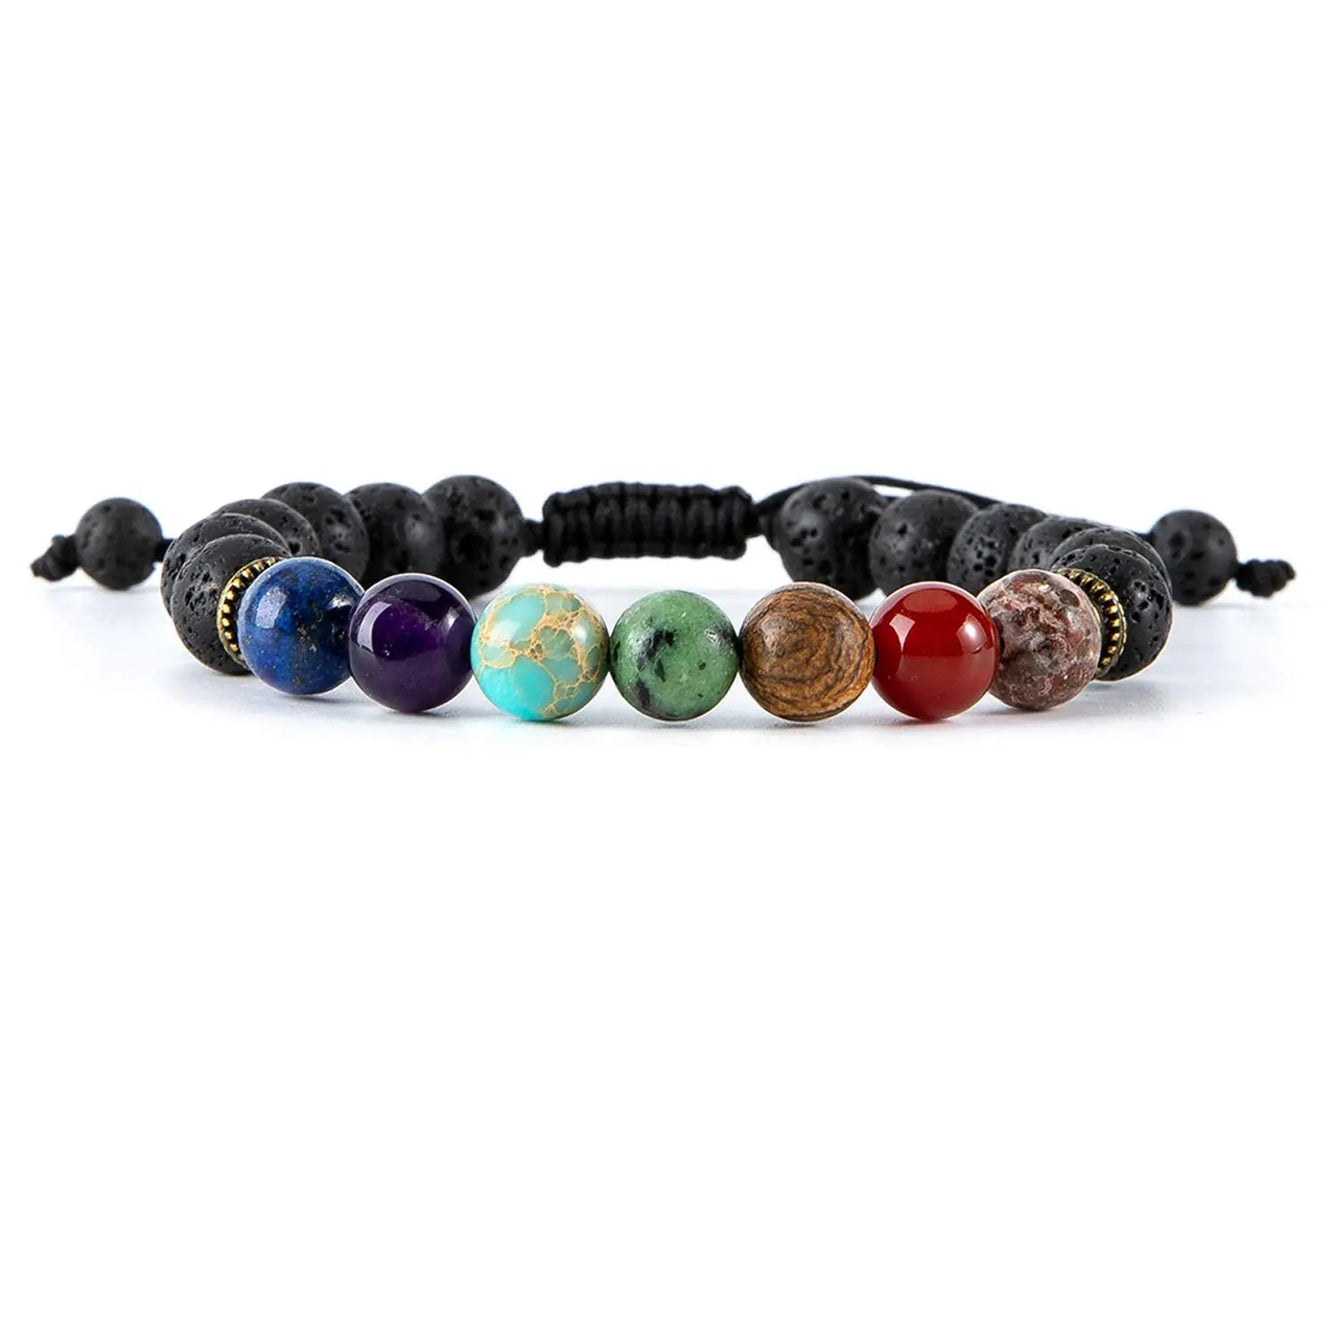 7 Chakra Healing Bracelet with Real Stones Anxiety Meditation Yoga - Lava Chakra Healing Crystal Home